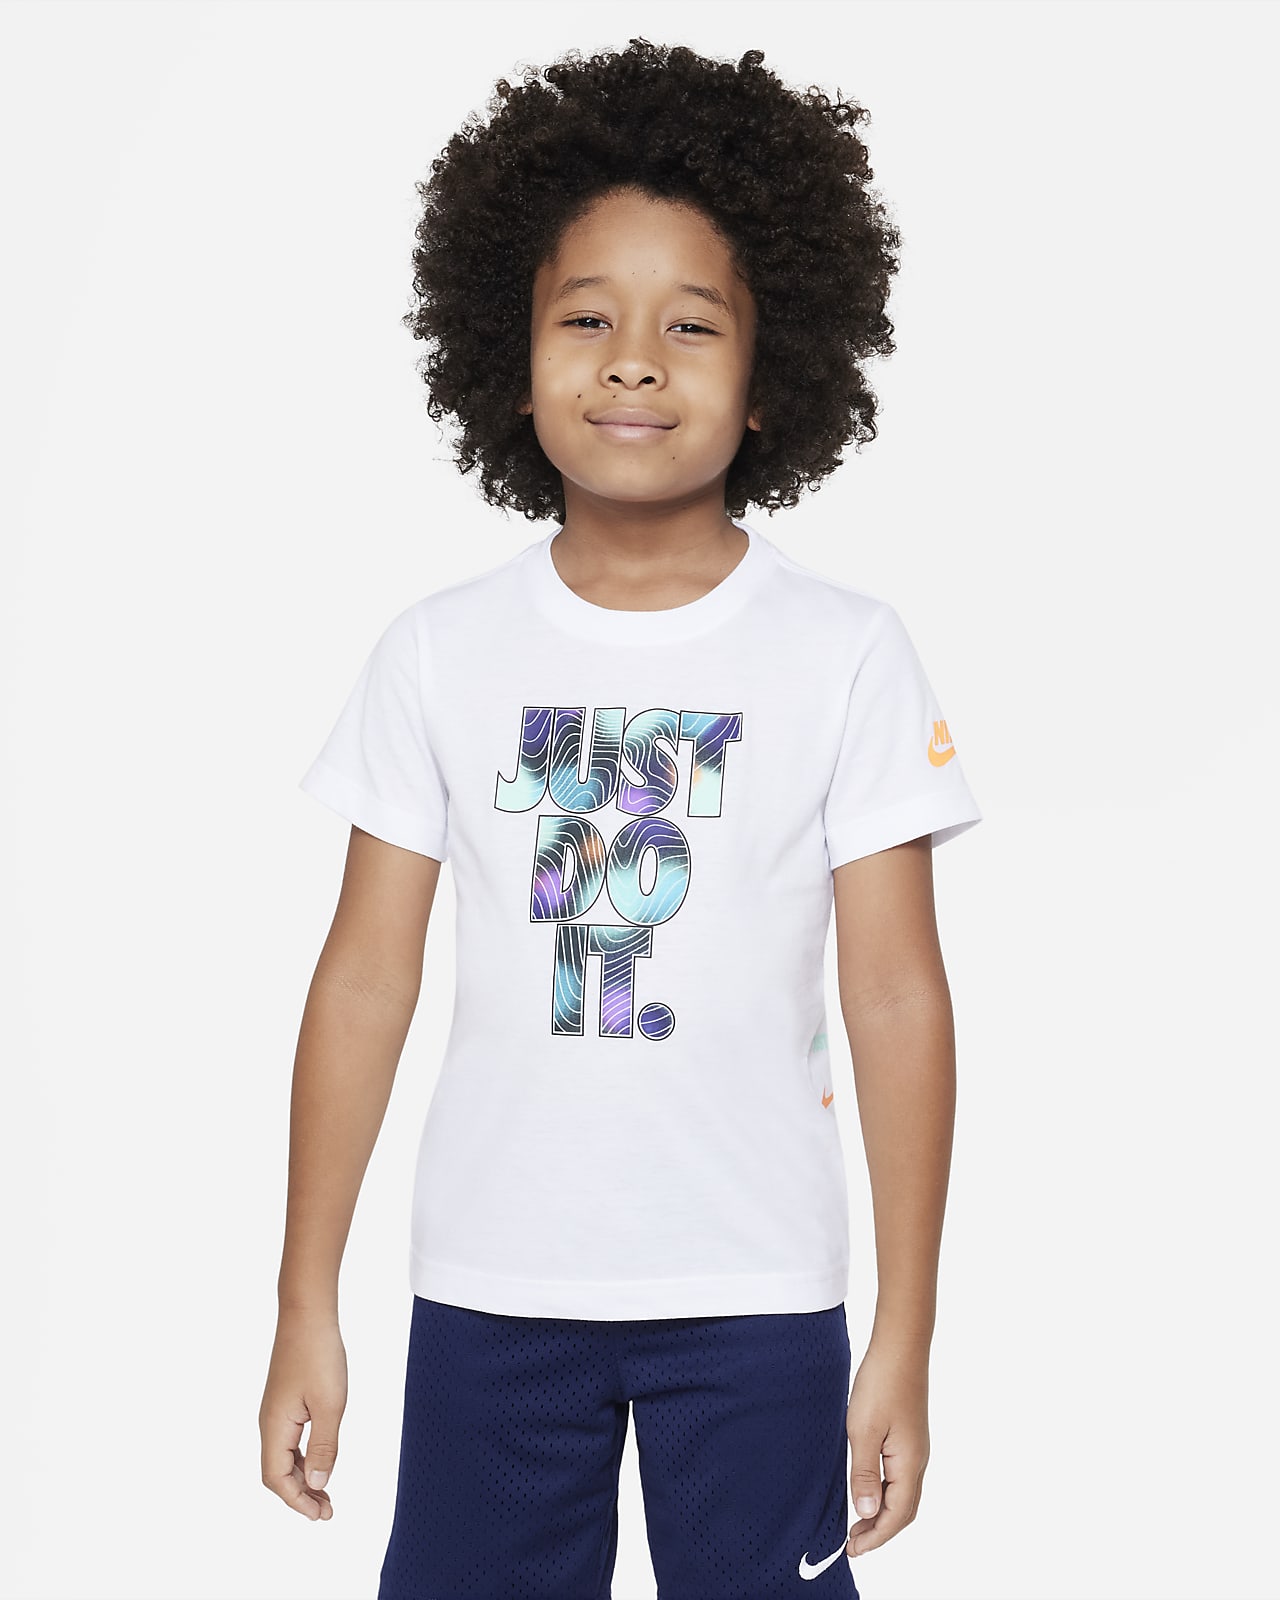 Nike "Just Do It" Illuminate Tee Younger Kids' T-Shirt